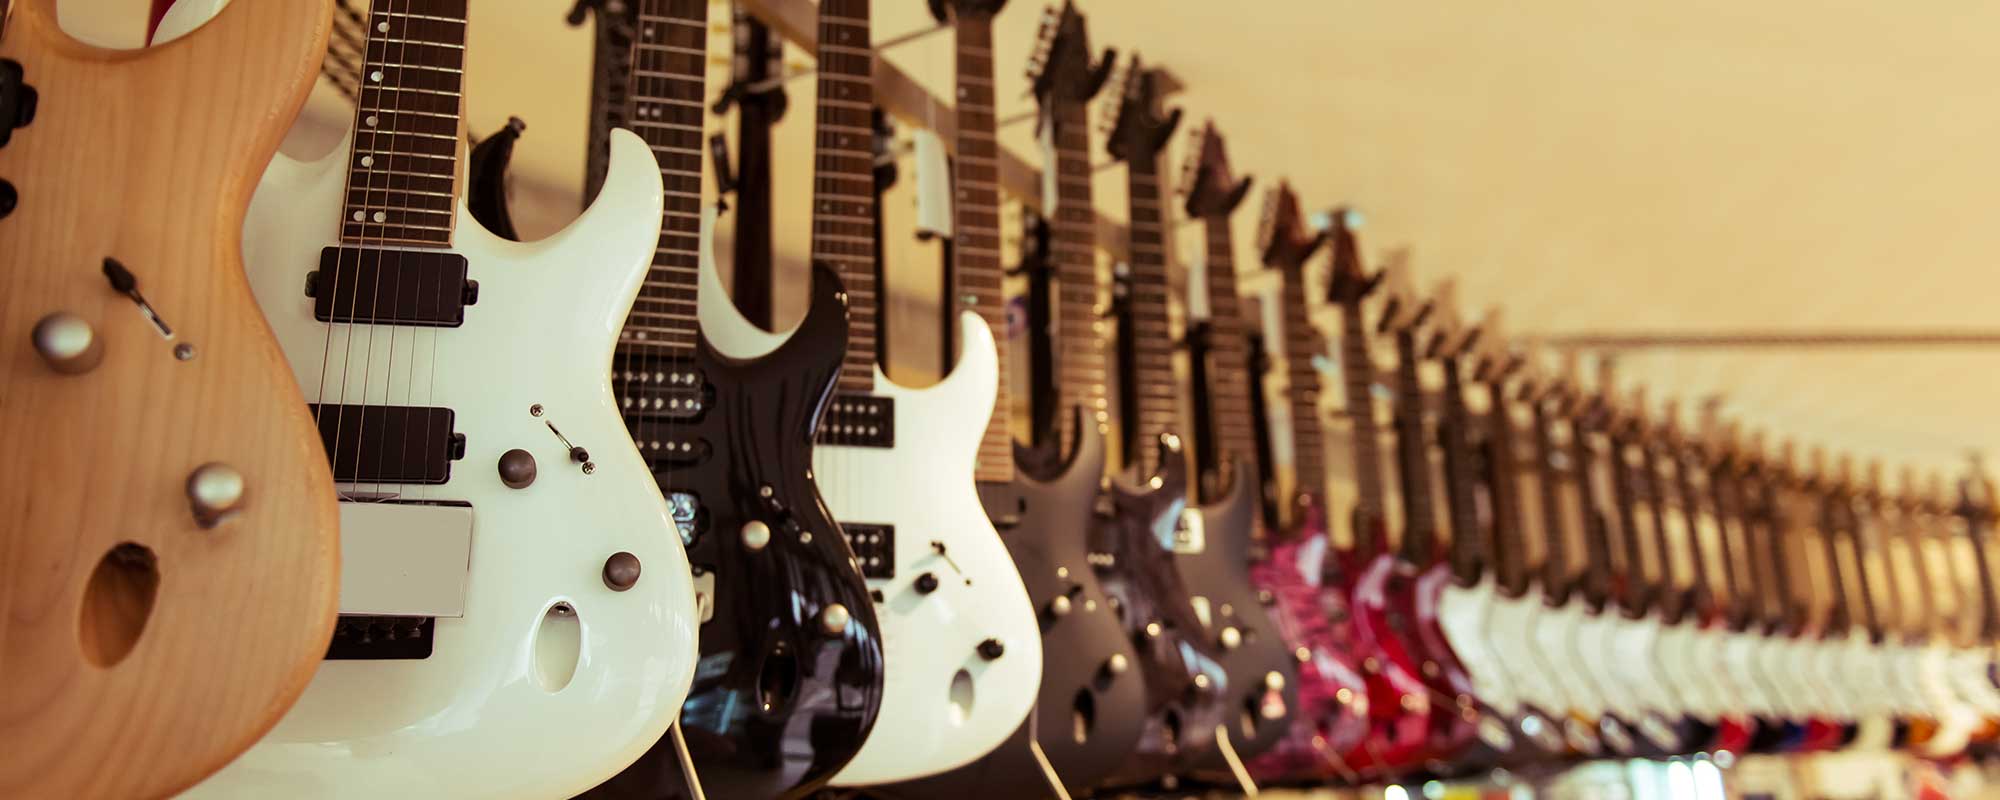 Row of Guitars